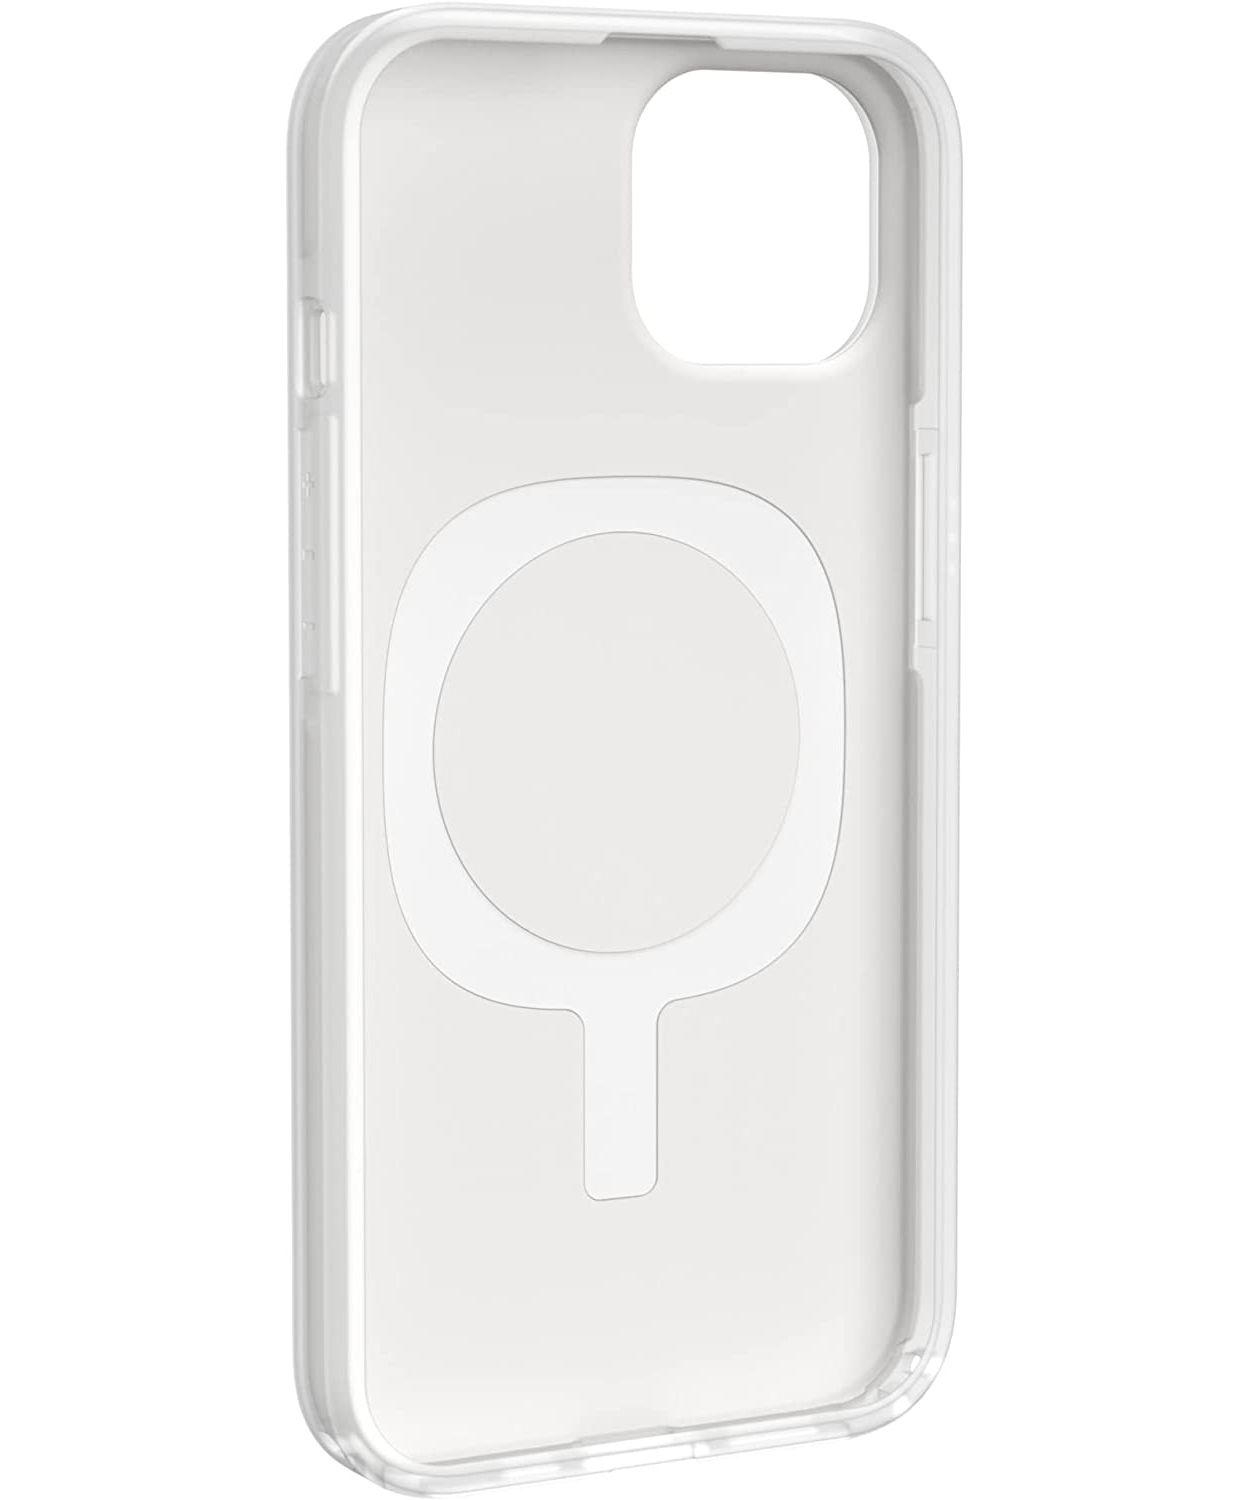 14 [U] iPhone Backcover, marshmallow Lucent (transparent) UAG MagSafe, by ARMOR URBAN Plus, U Apple, GEAR 2.0